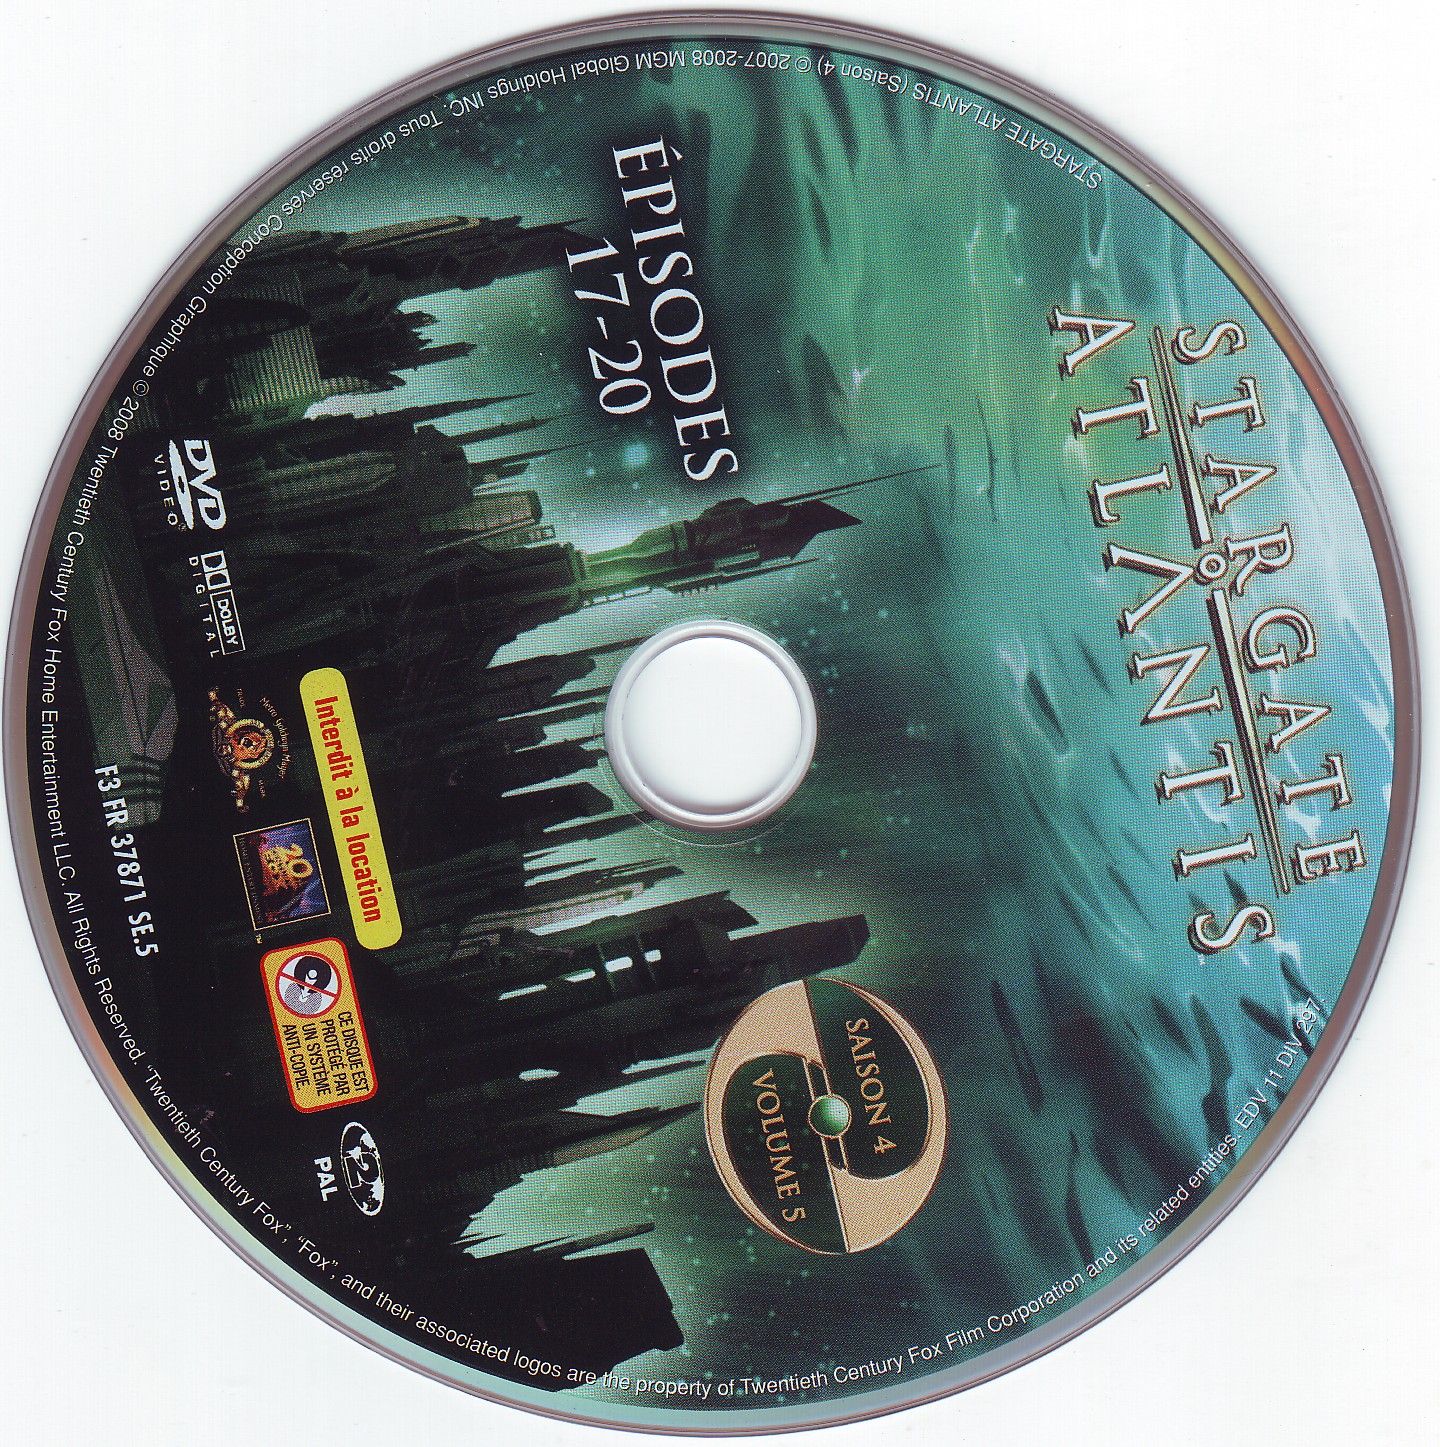 Stargate Atlantis saison 4 DISC 5